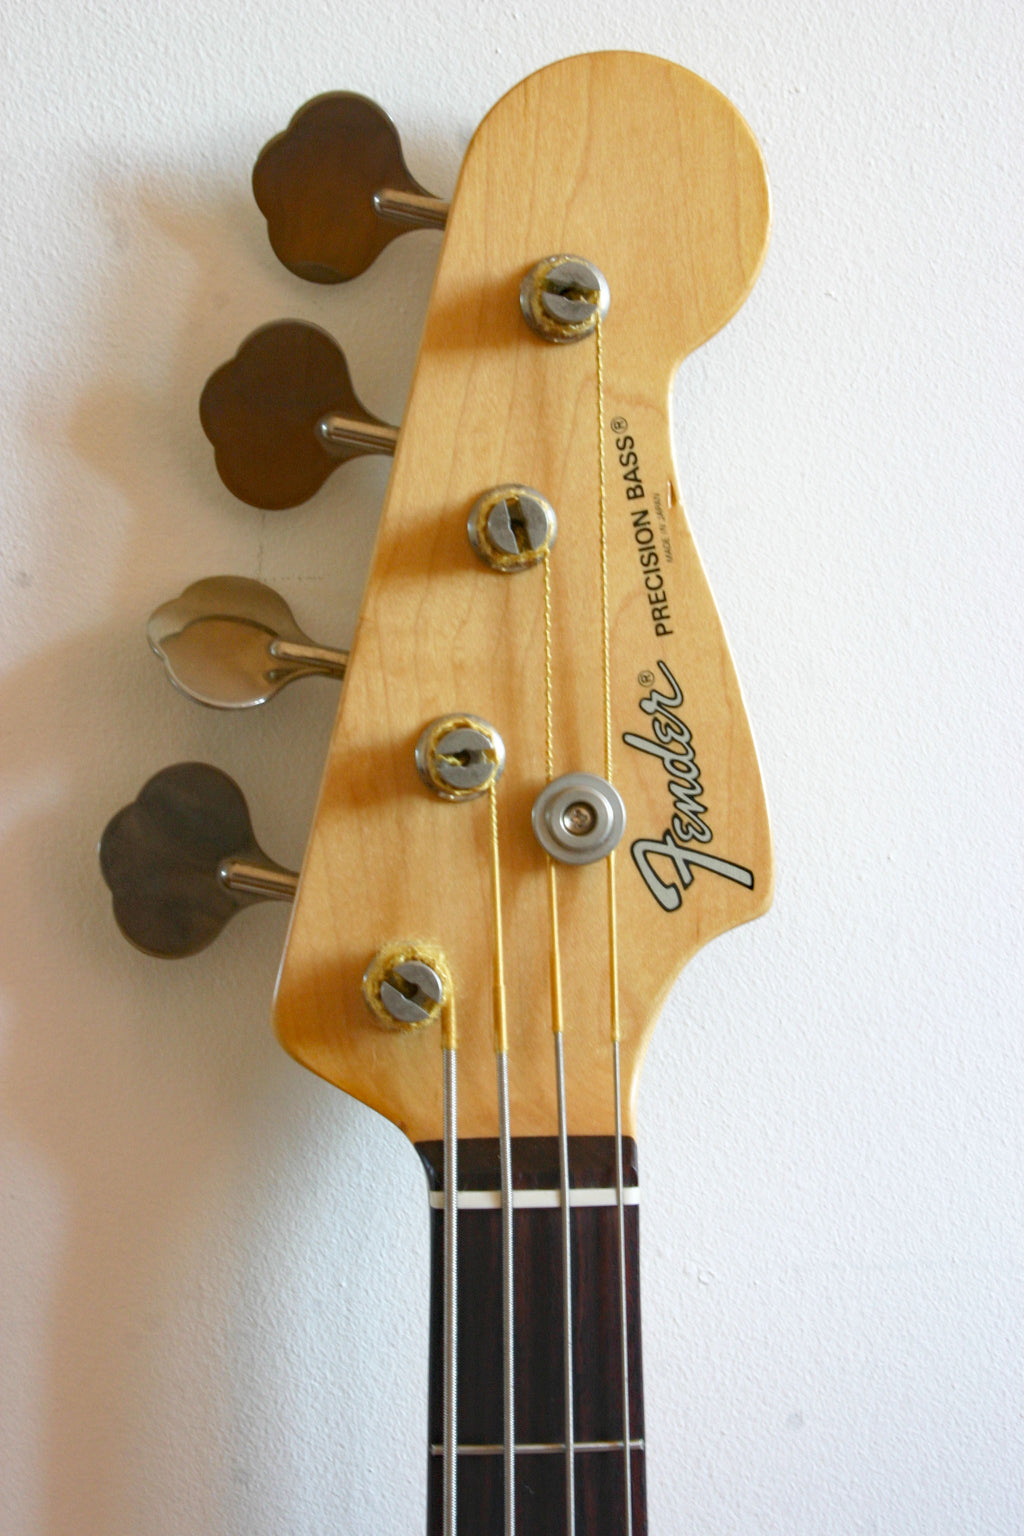 Used Fender Precision Bass '62 Capri Orange CIJ